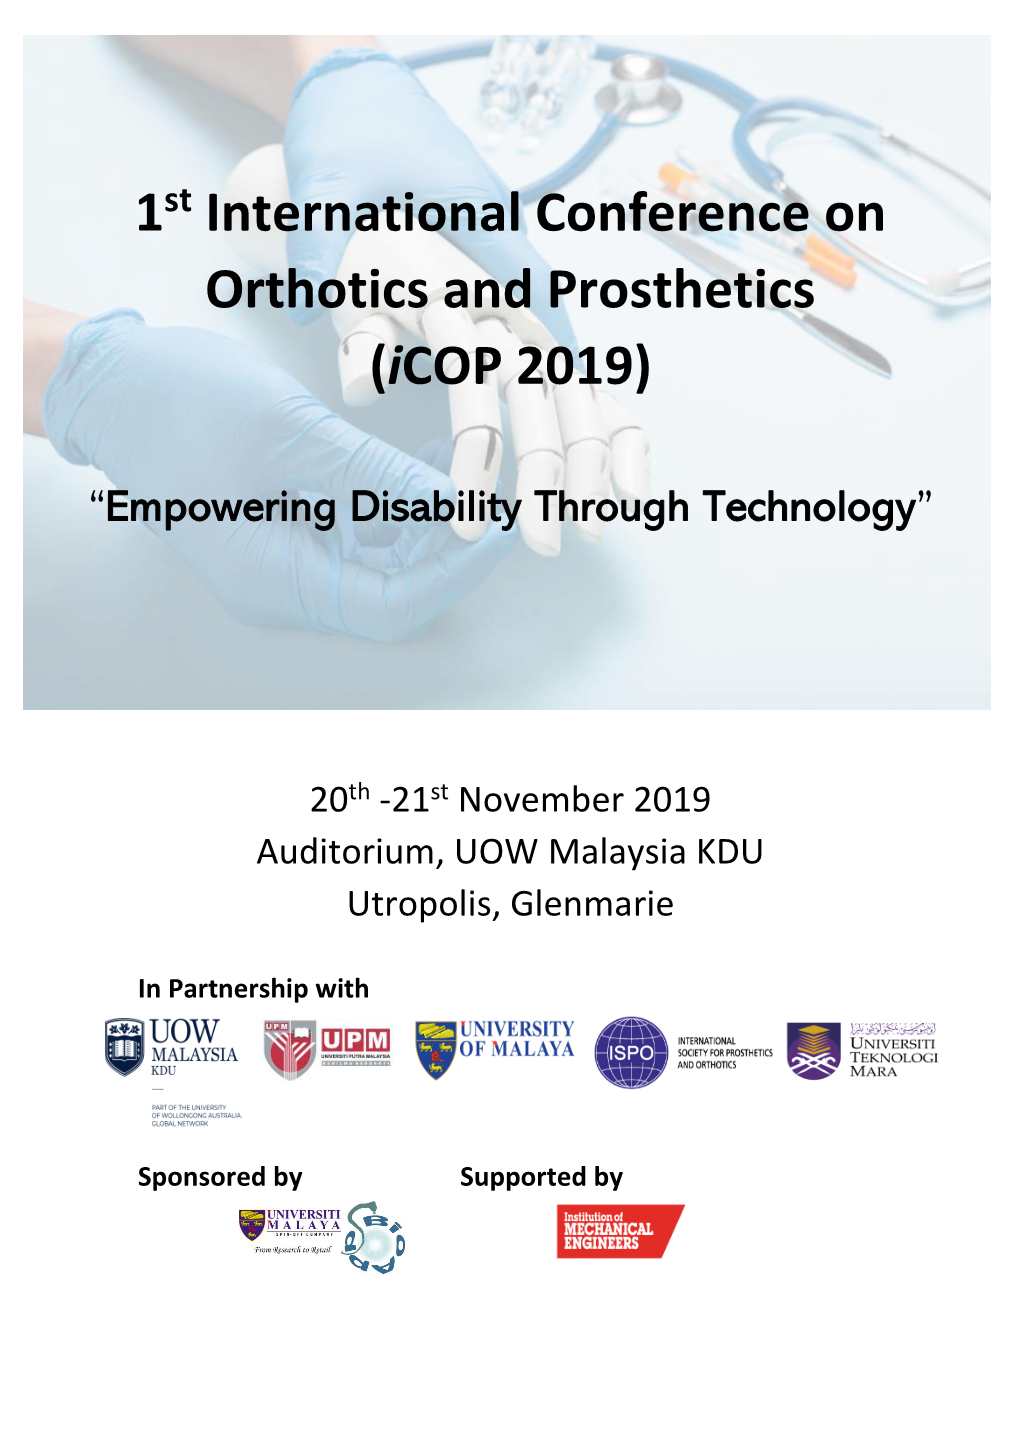 1St International Conference on Orthotics and Prosthetics (Icop 2019) 20Th -21St November 2019 UOW Malaysia KDU, Utropolis, Glenmarie Shah Alam